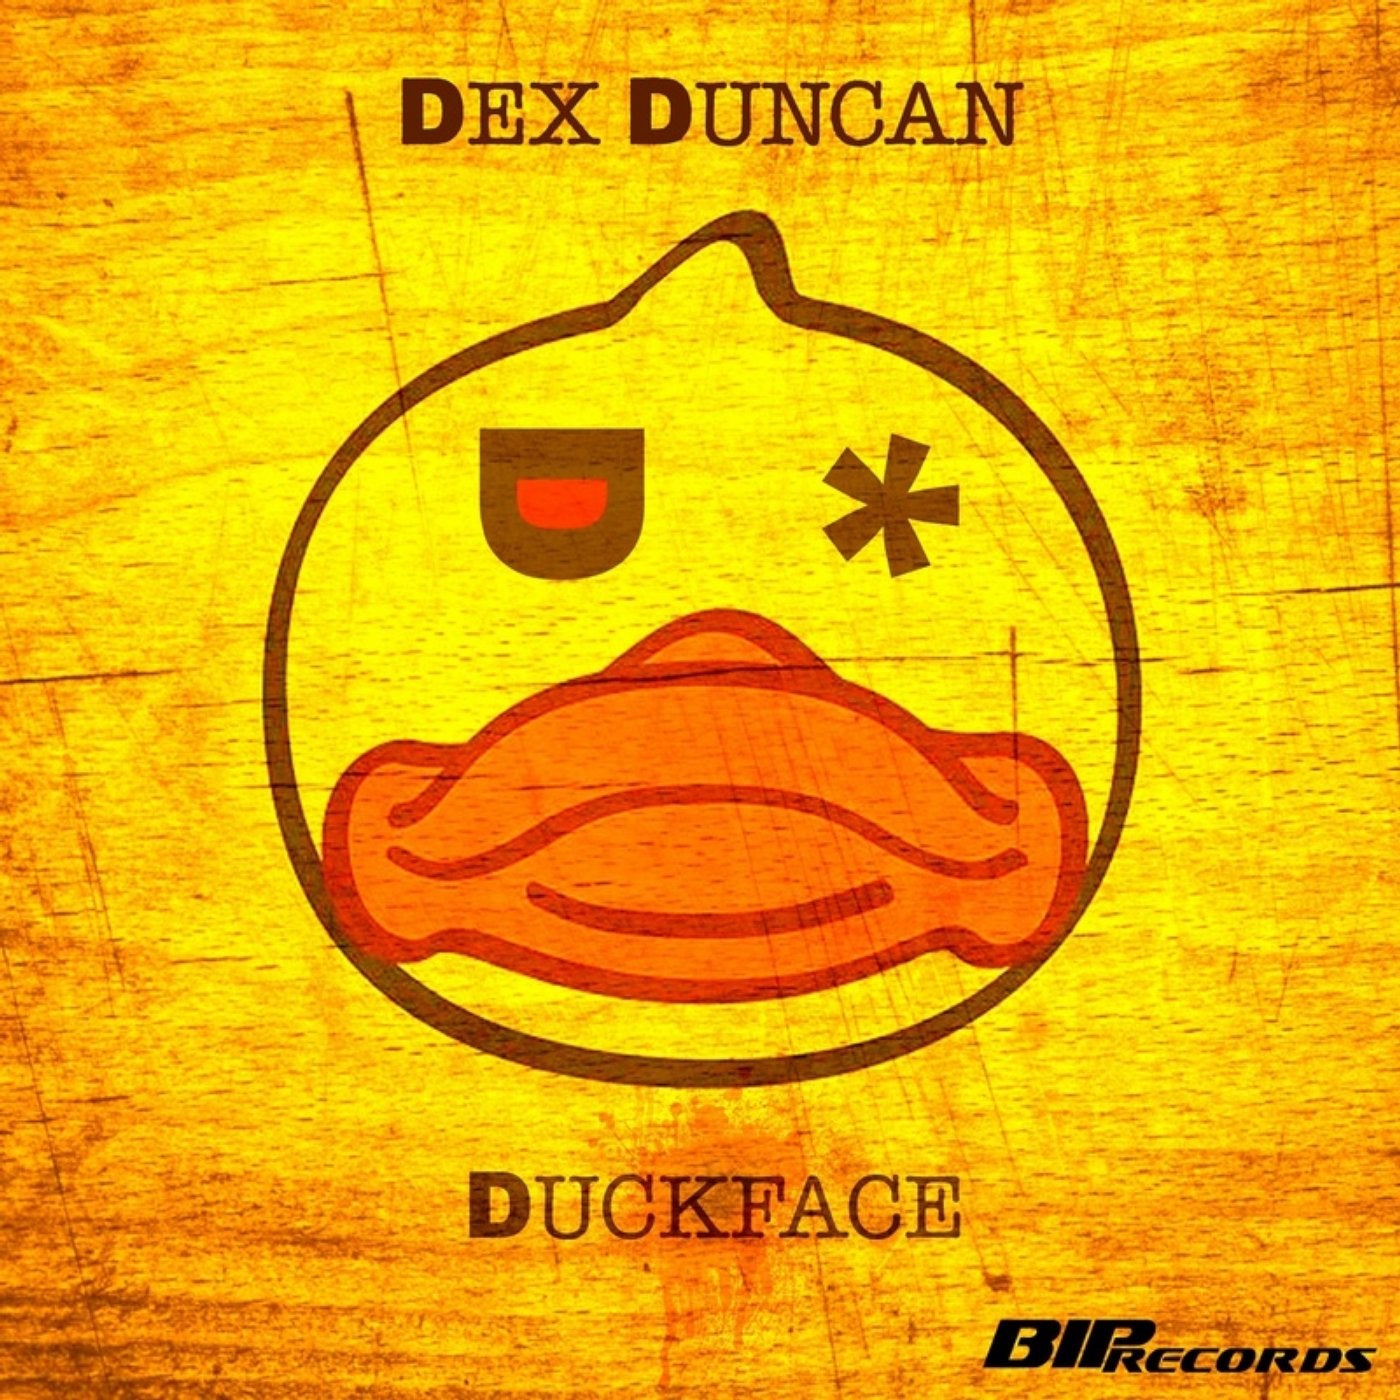 Duckface Original Extended Mix